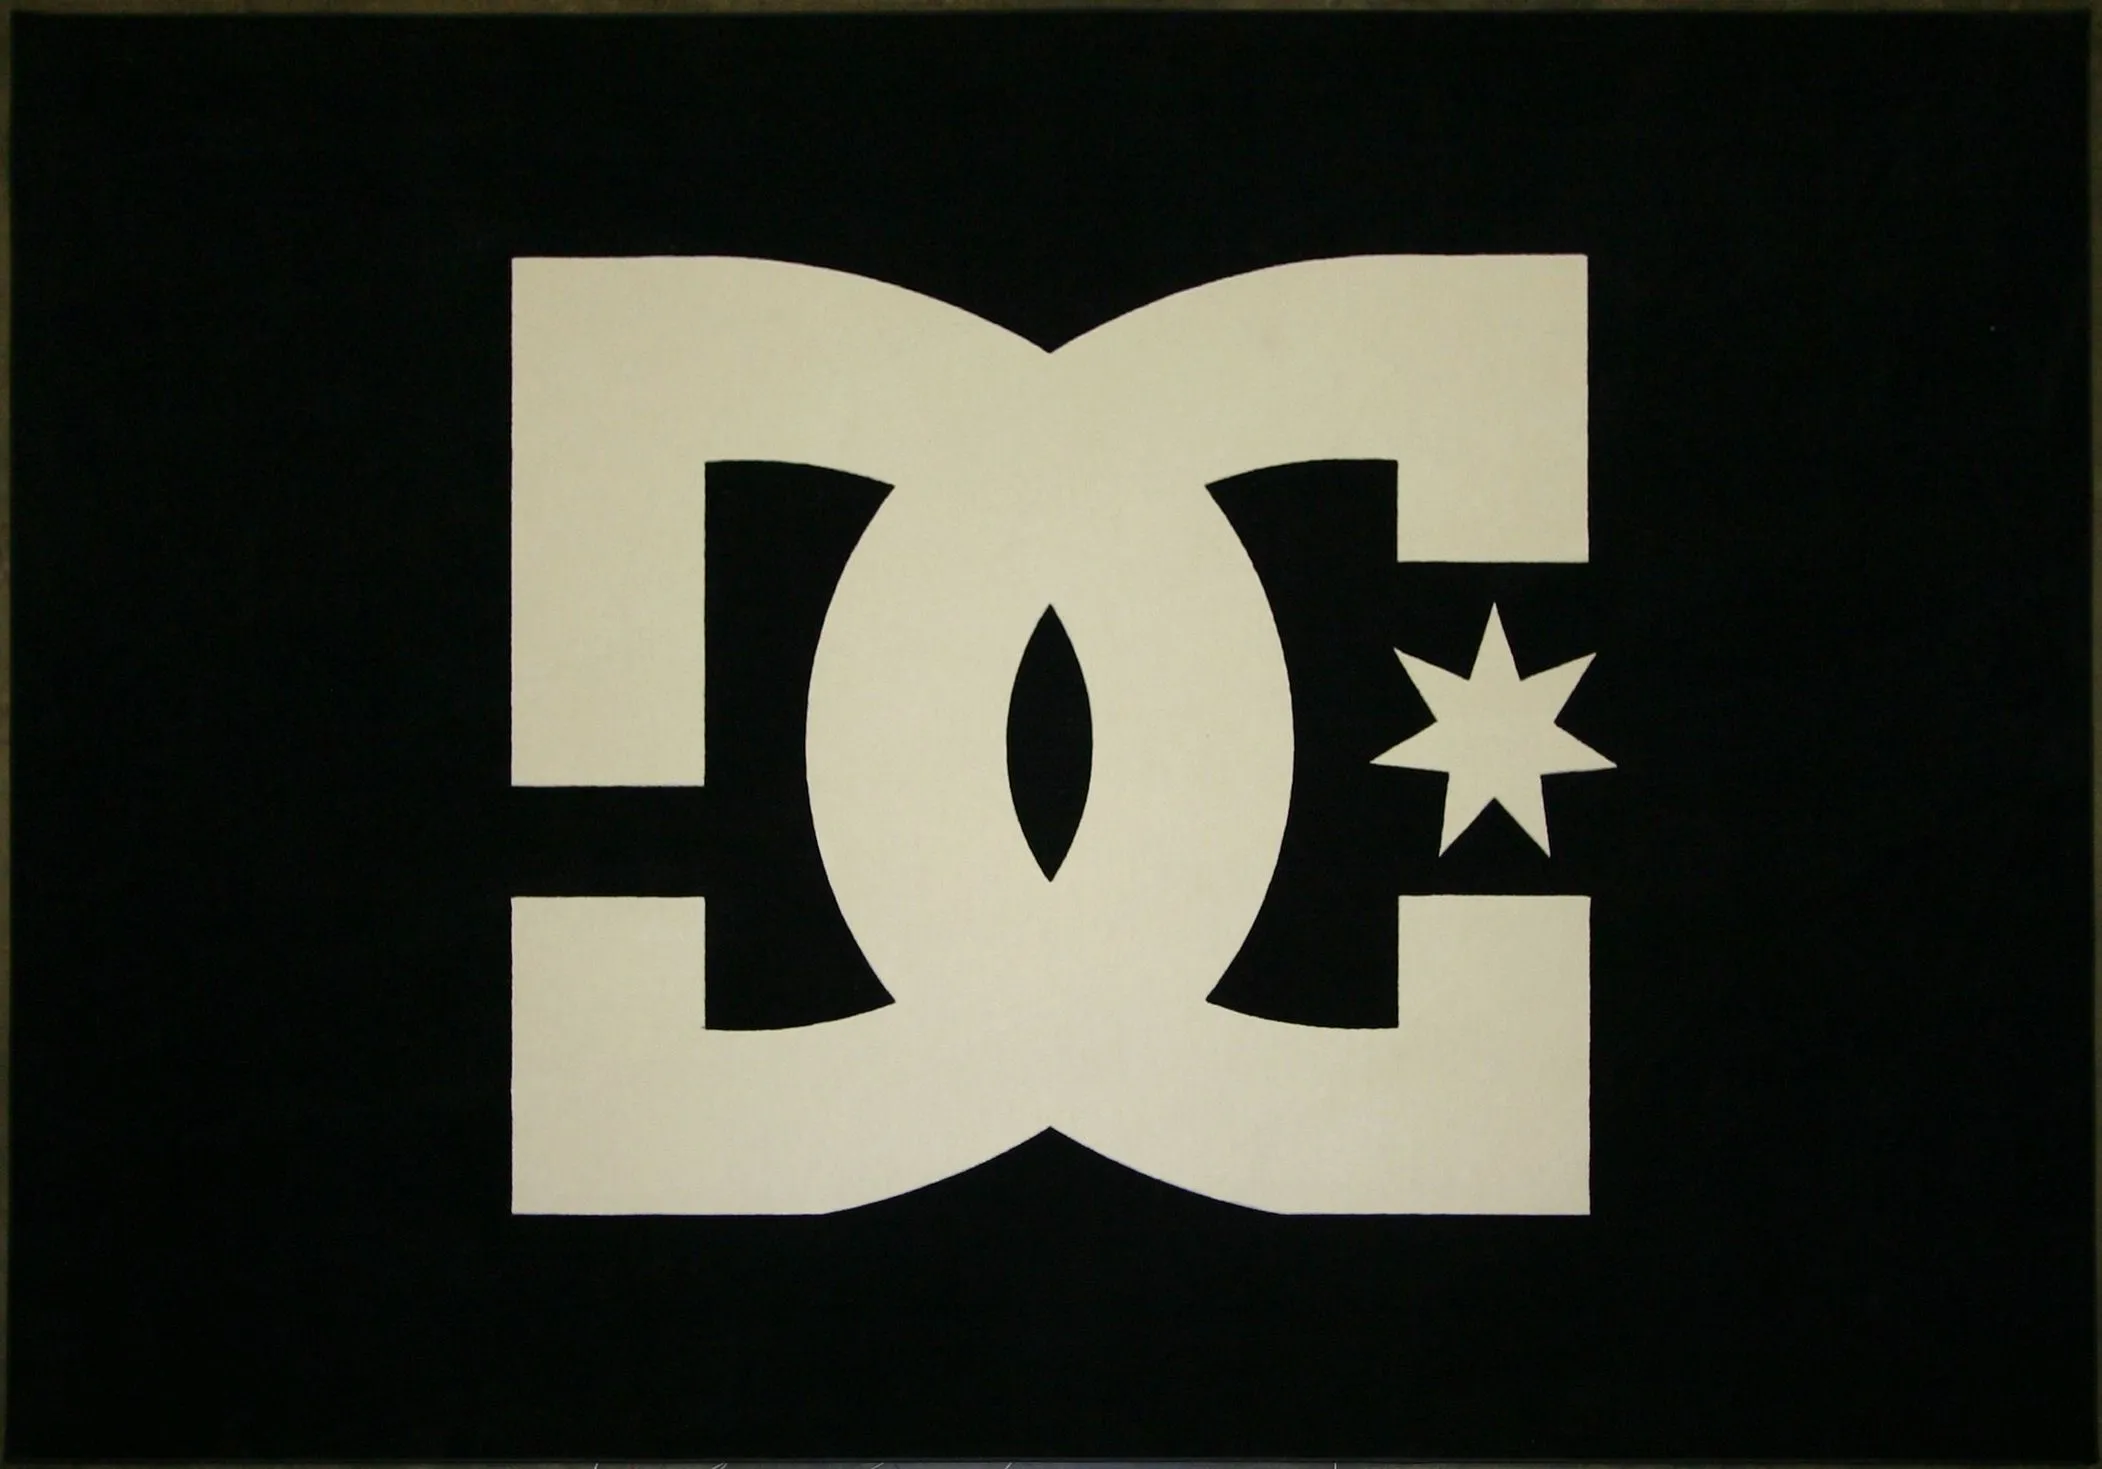 Dc Shoes Logo